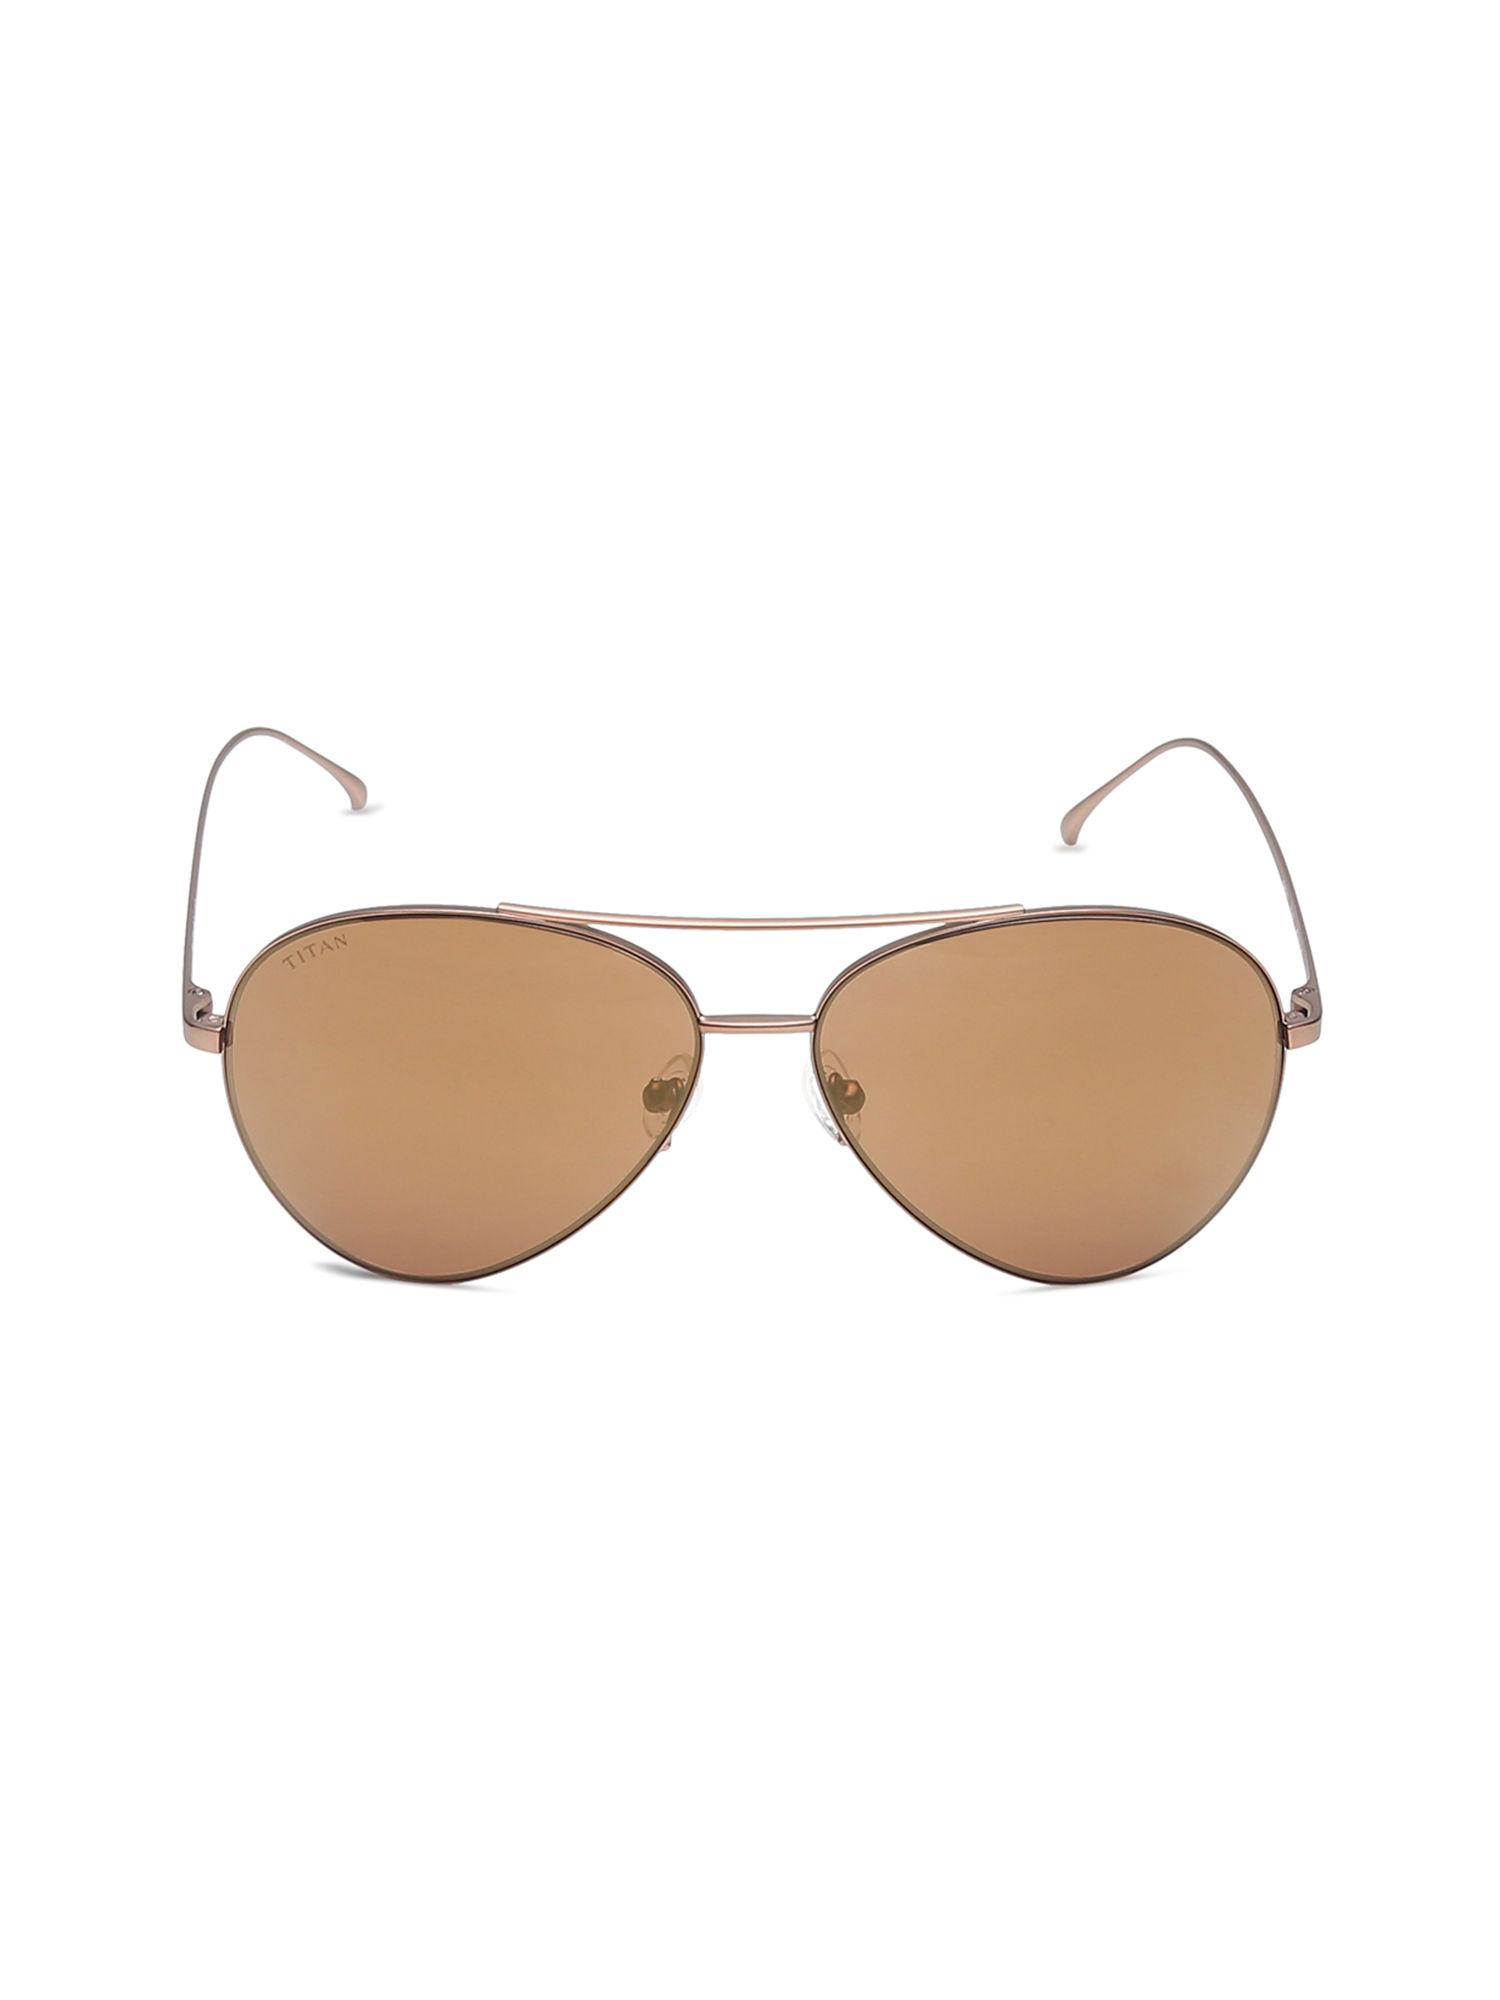 brown aviator sunglasses (gm319yl1nv)